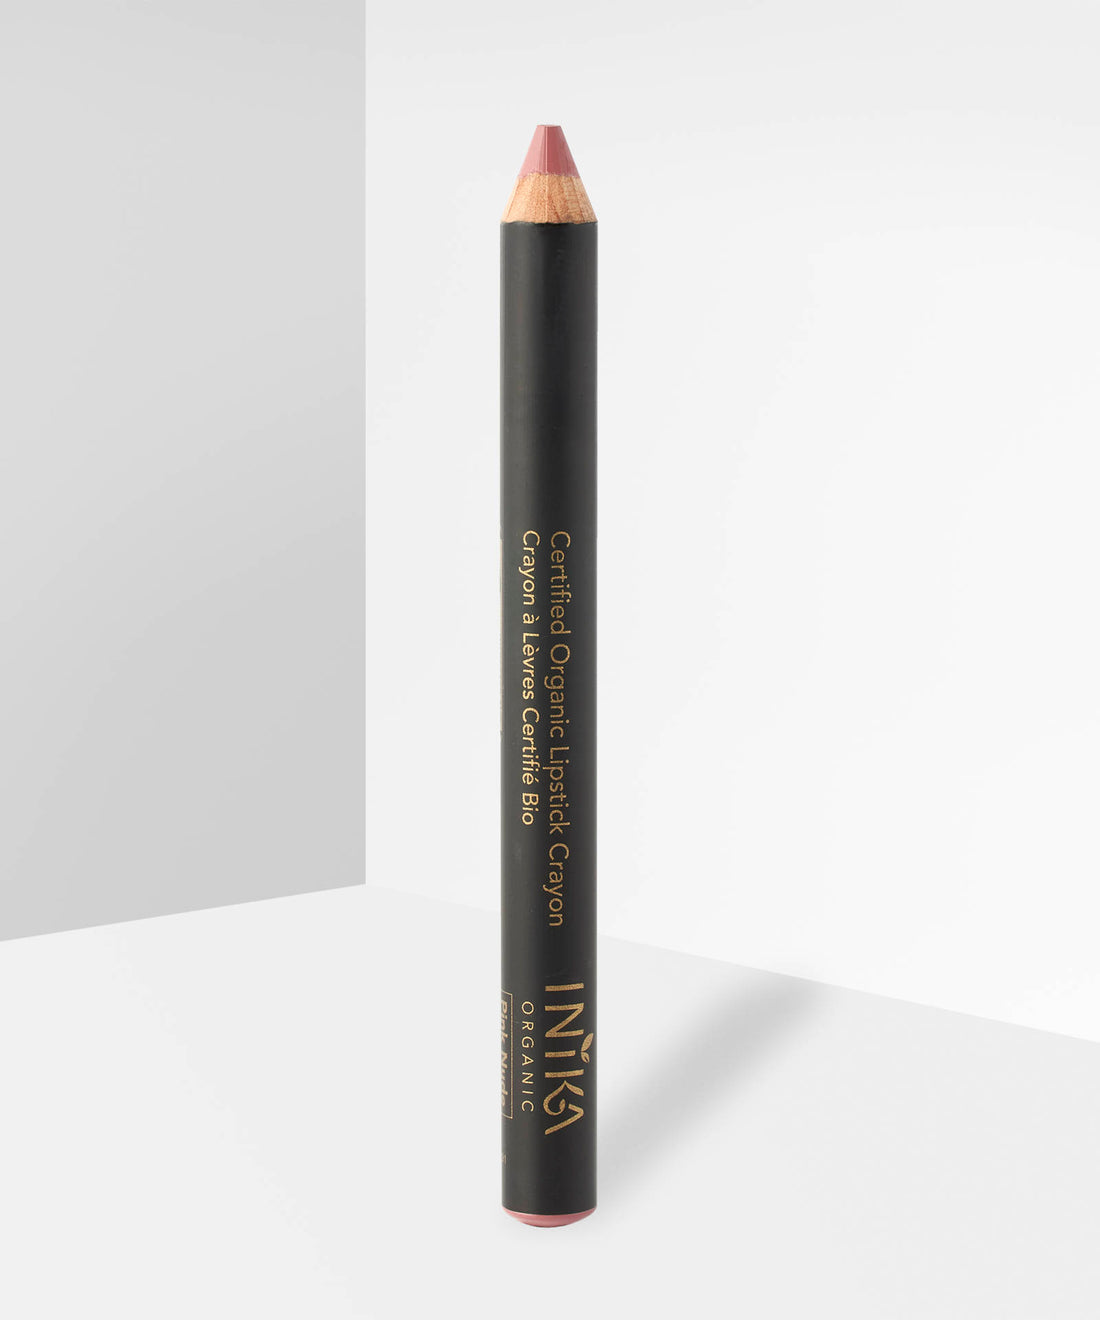 INIKA certified organic lipstick pencil, 3g